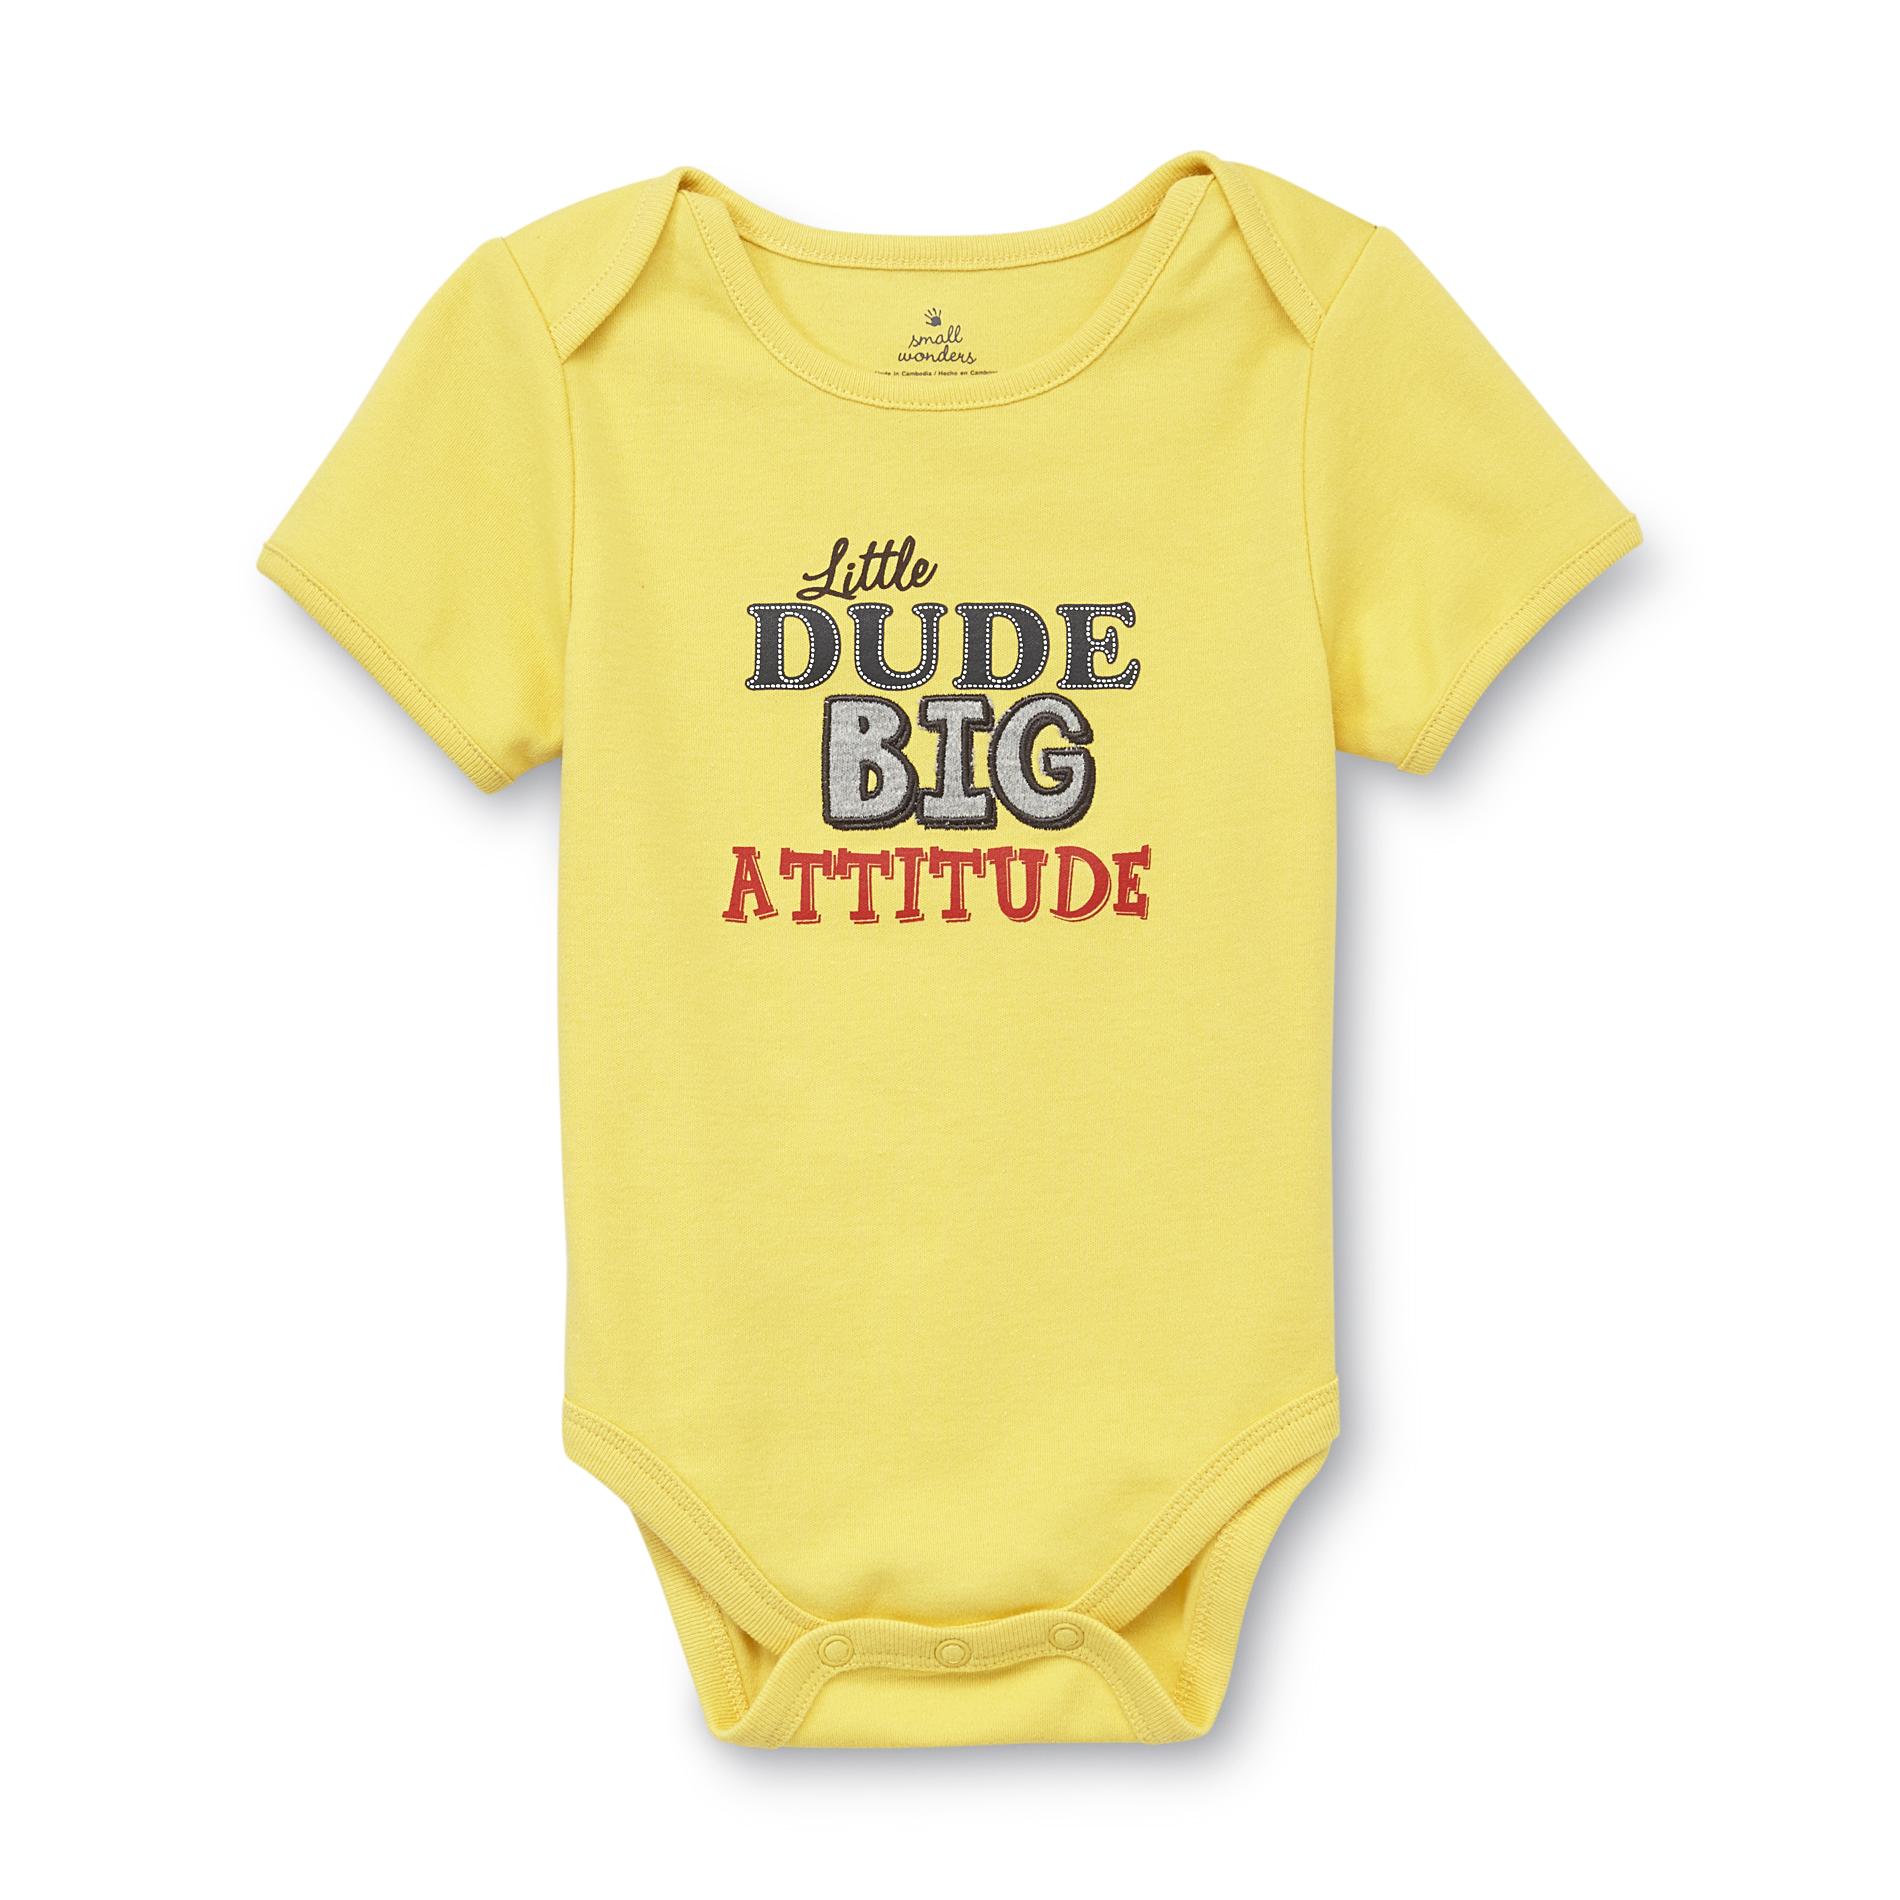 Small Wonders Newborn & Infant Boy's Short-Sleeve Bodysuit - Little Dude